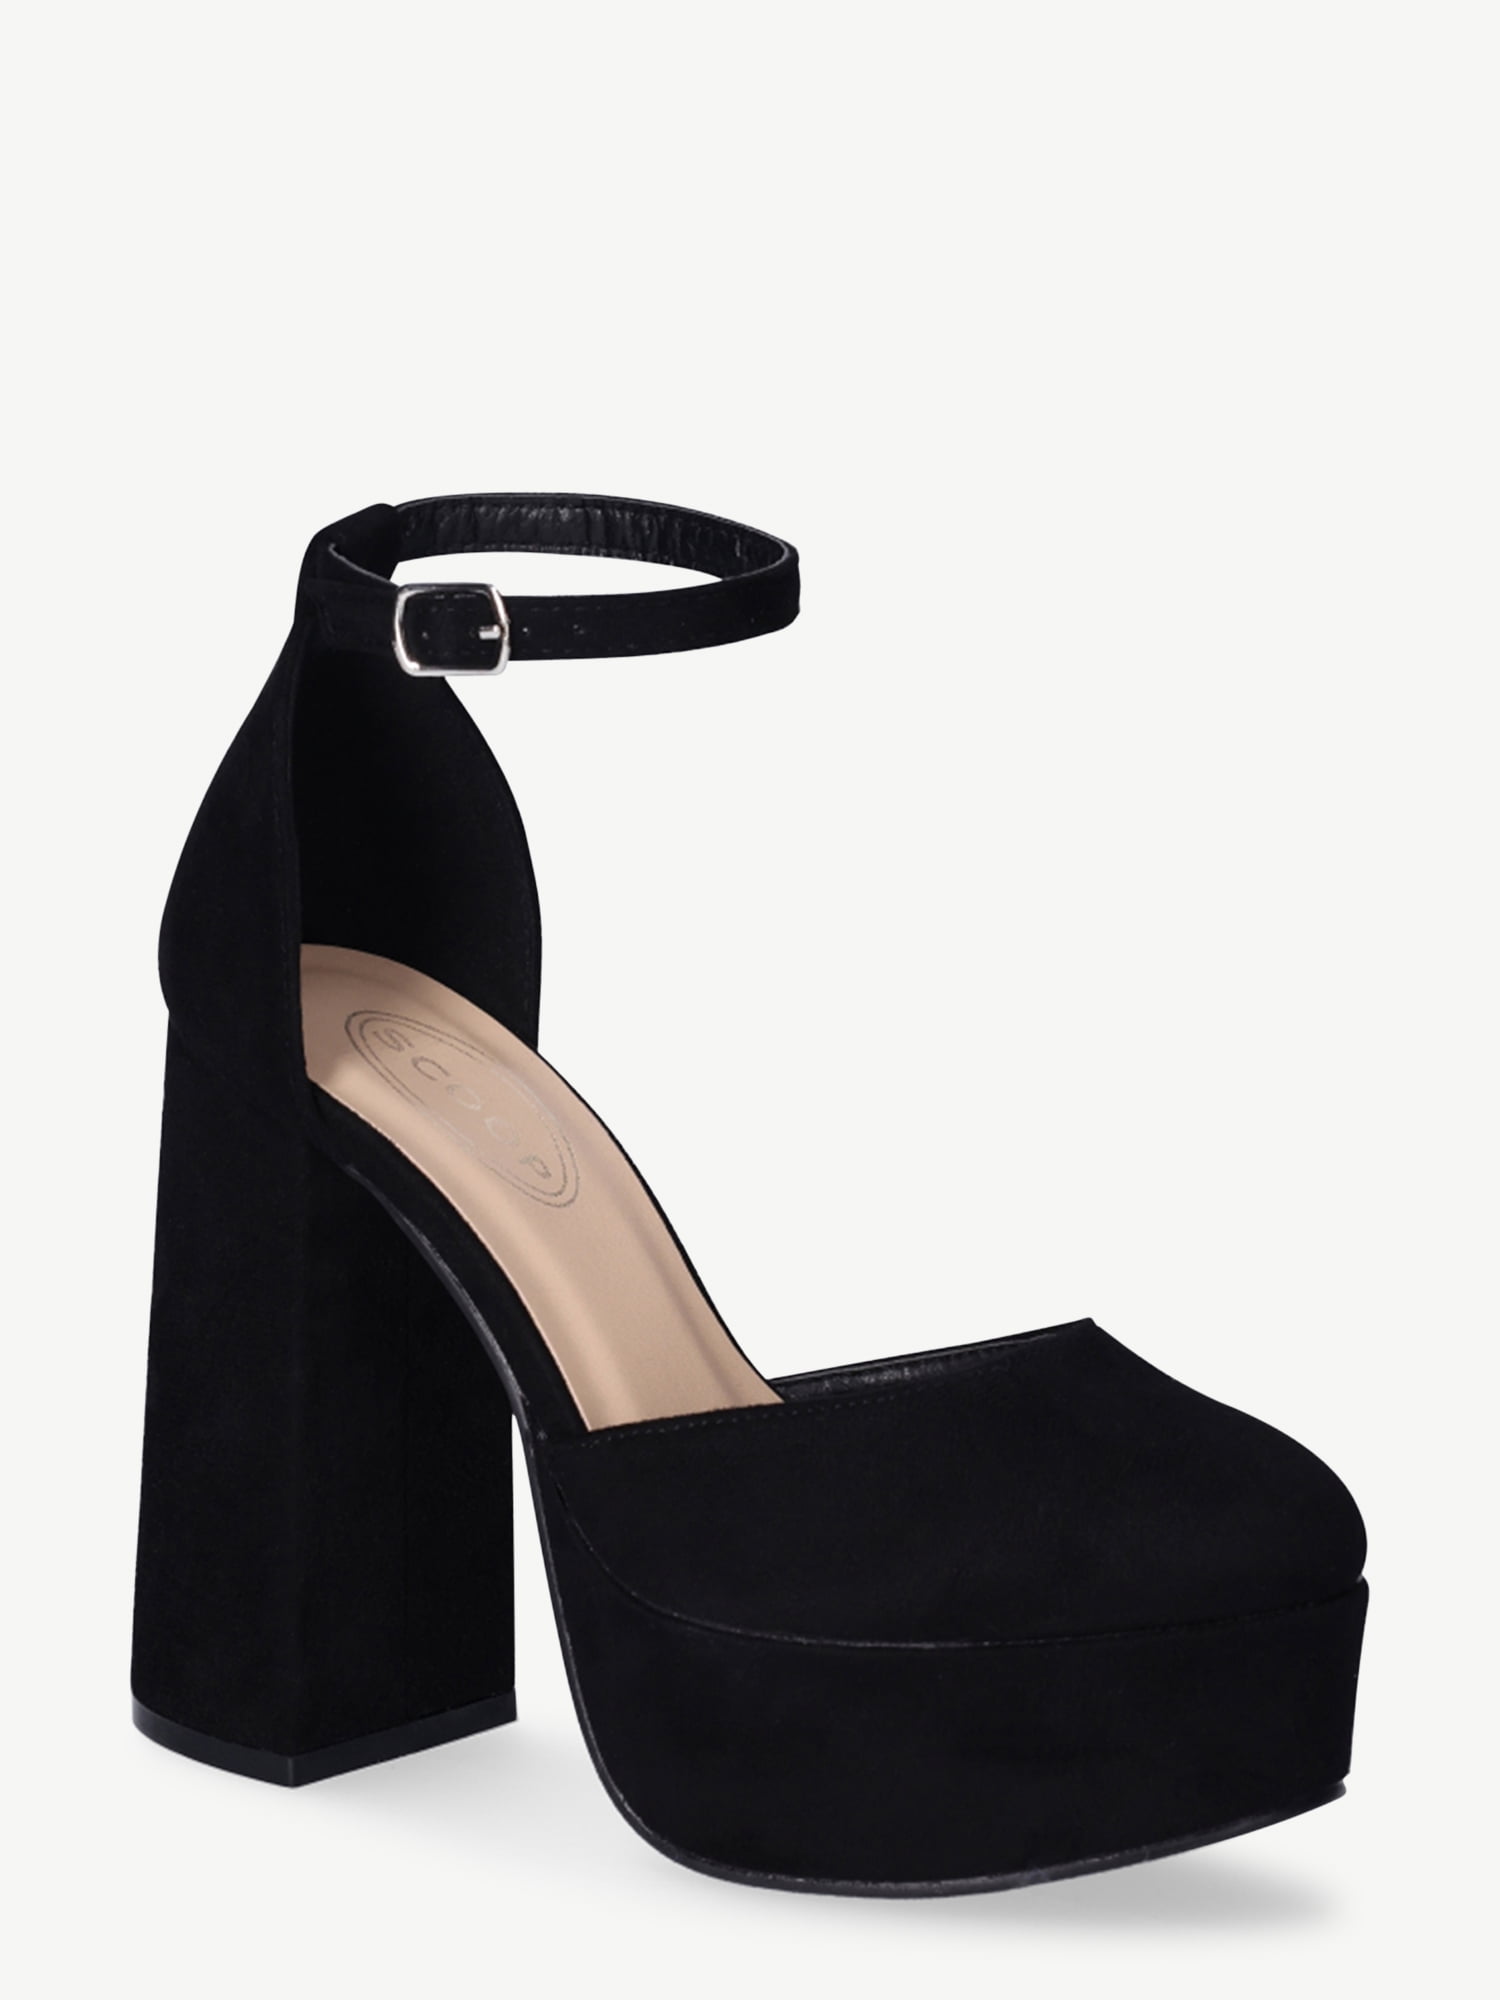 Nude platform heels in black (Flatforms)